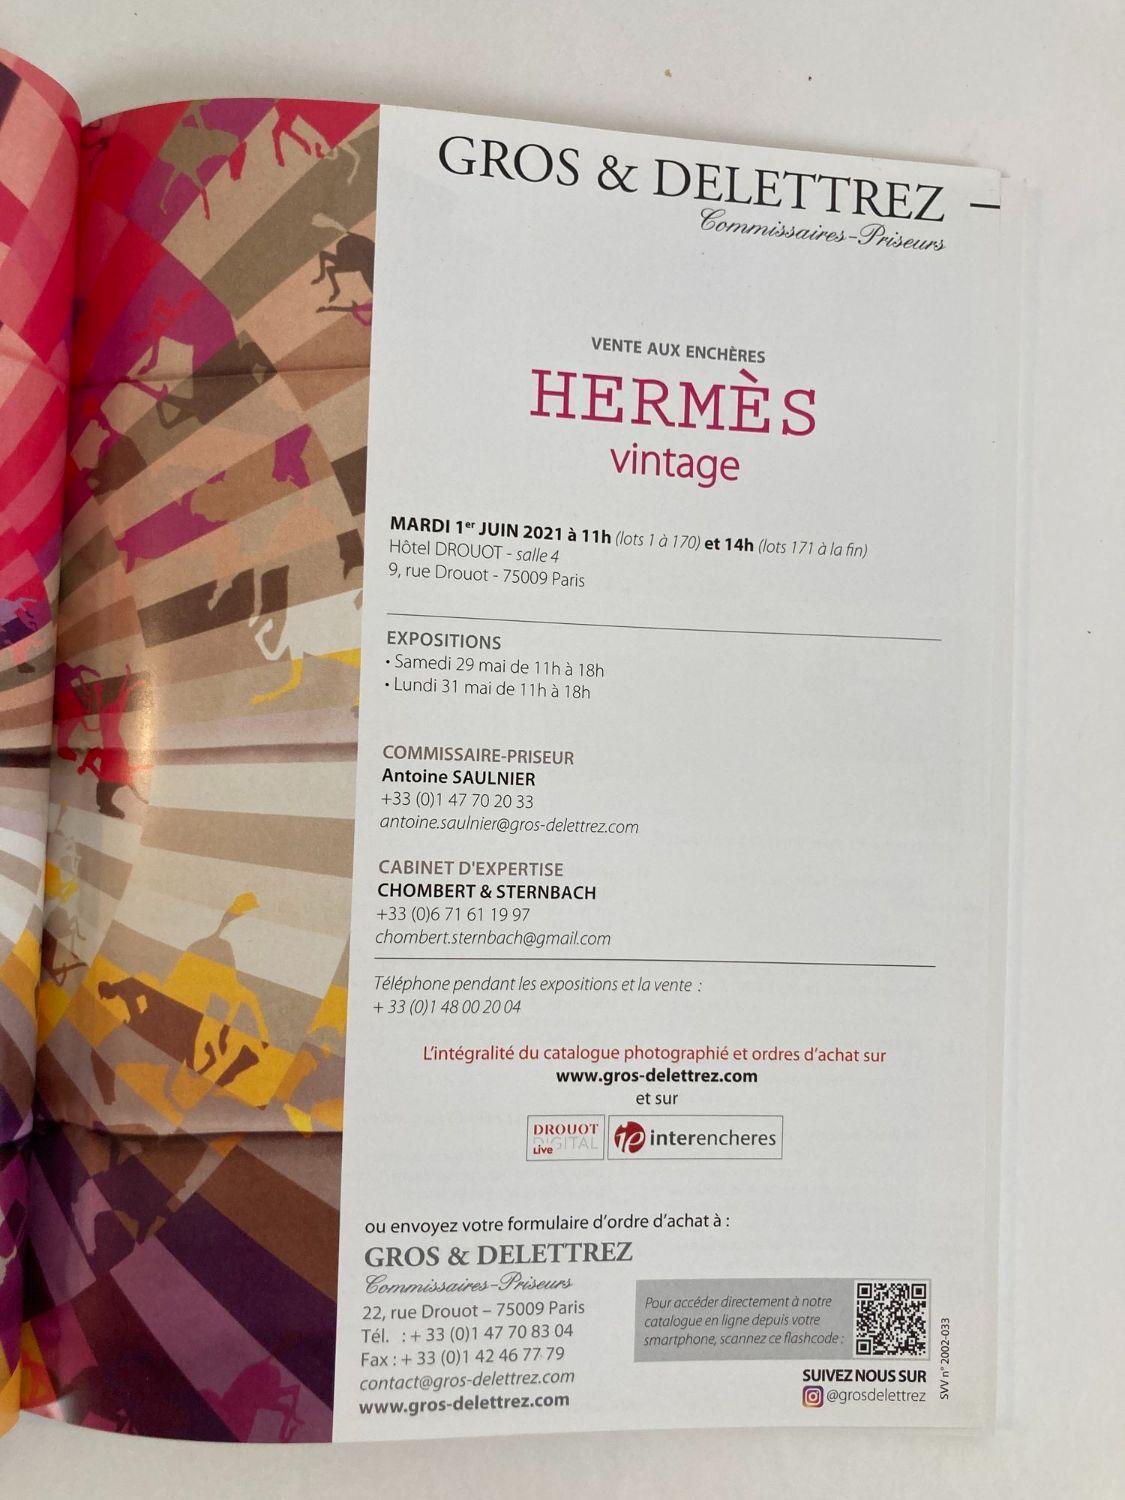 French Hermes Vintage Paris Auction Catalog 2021 Published by Gros & Delettrez For Sale